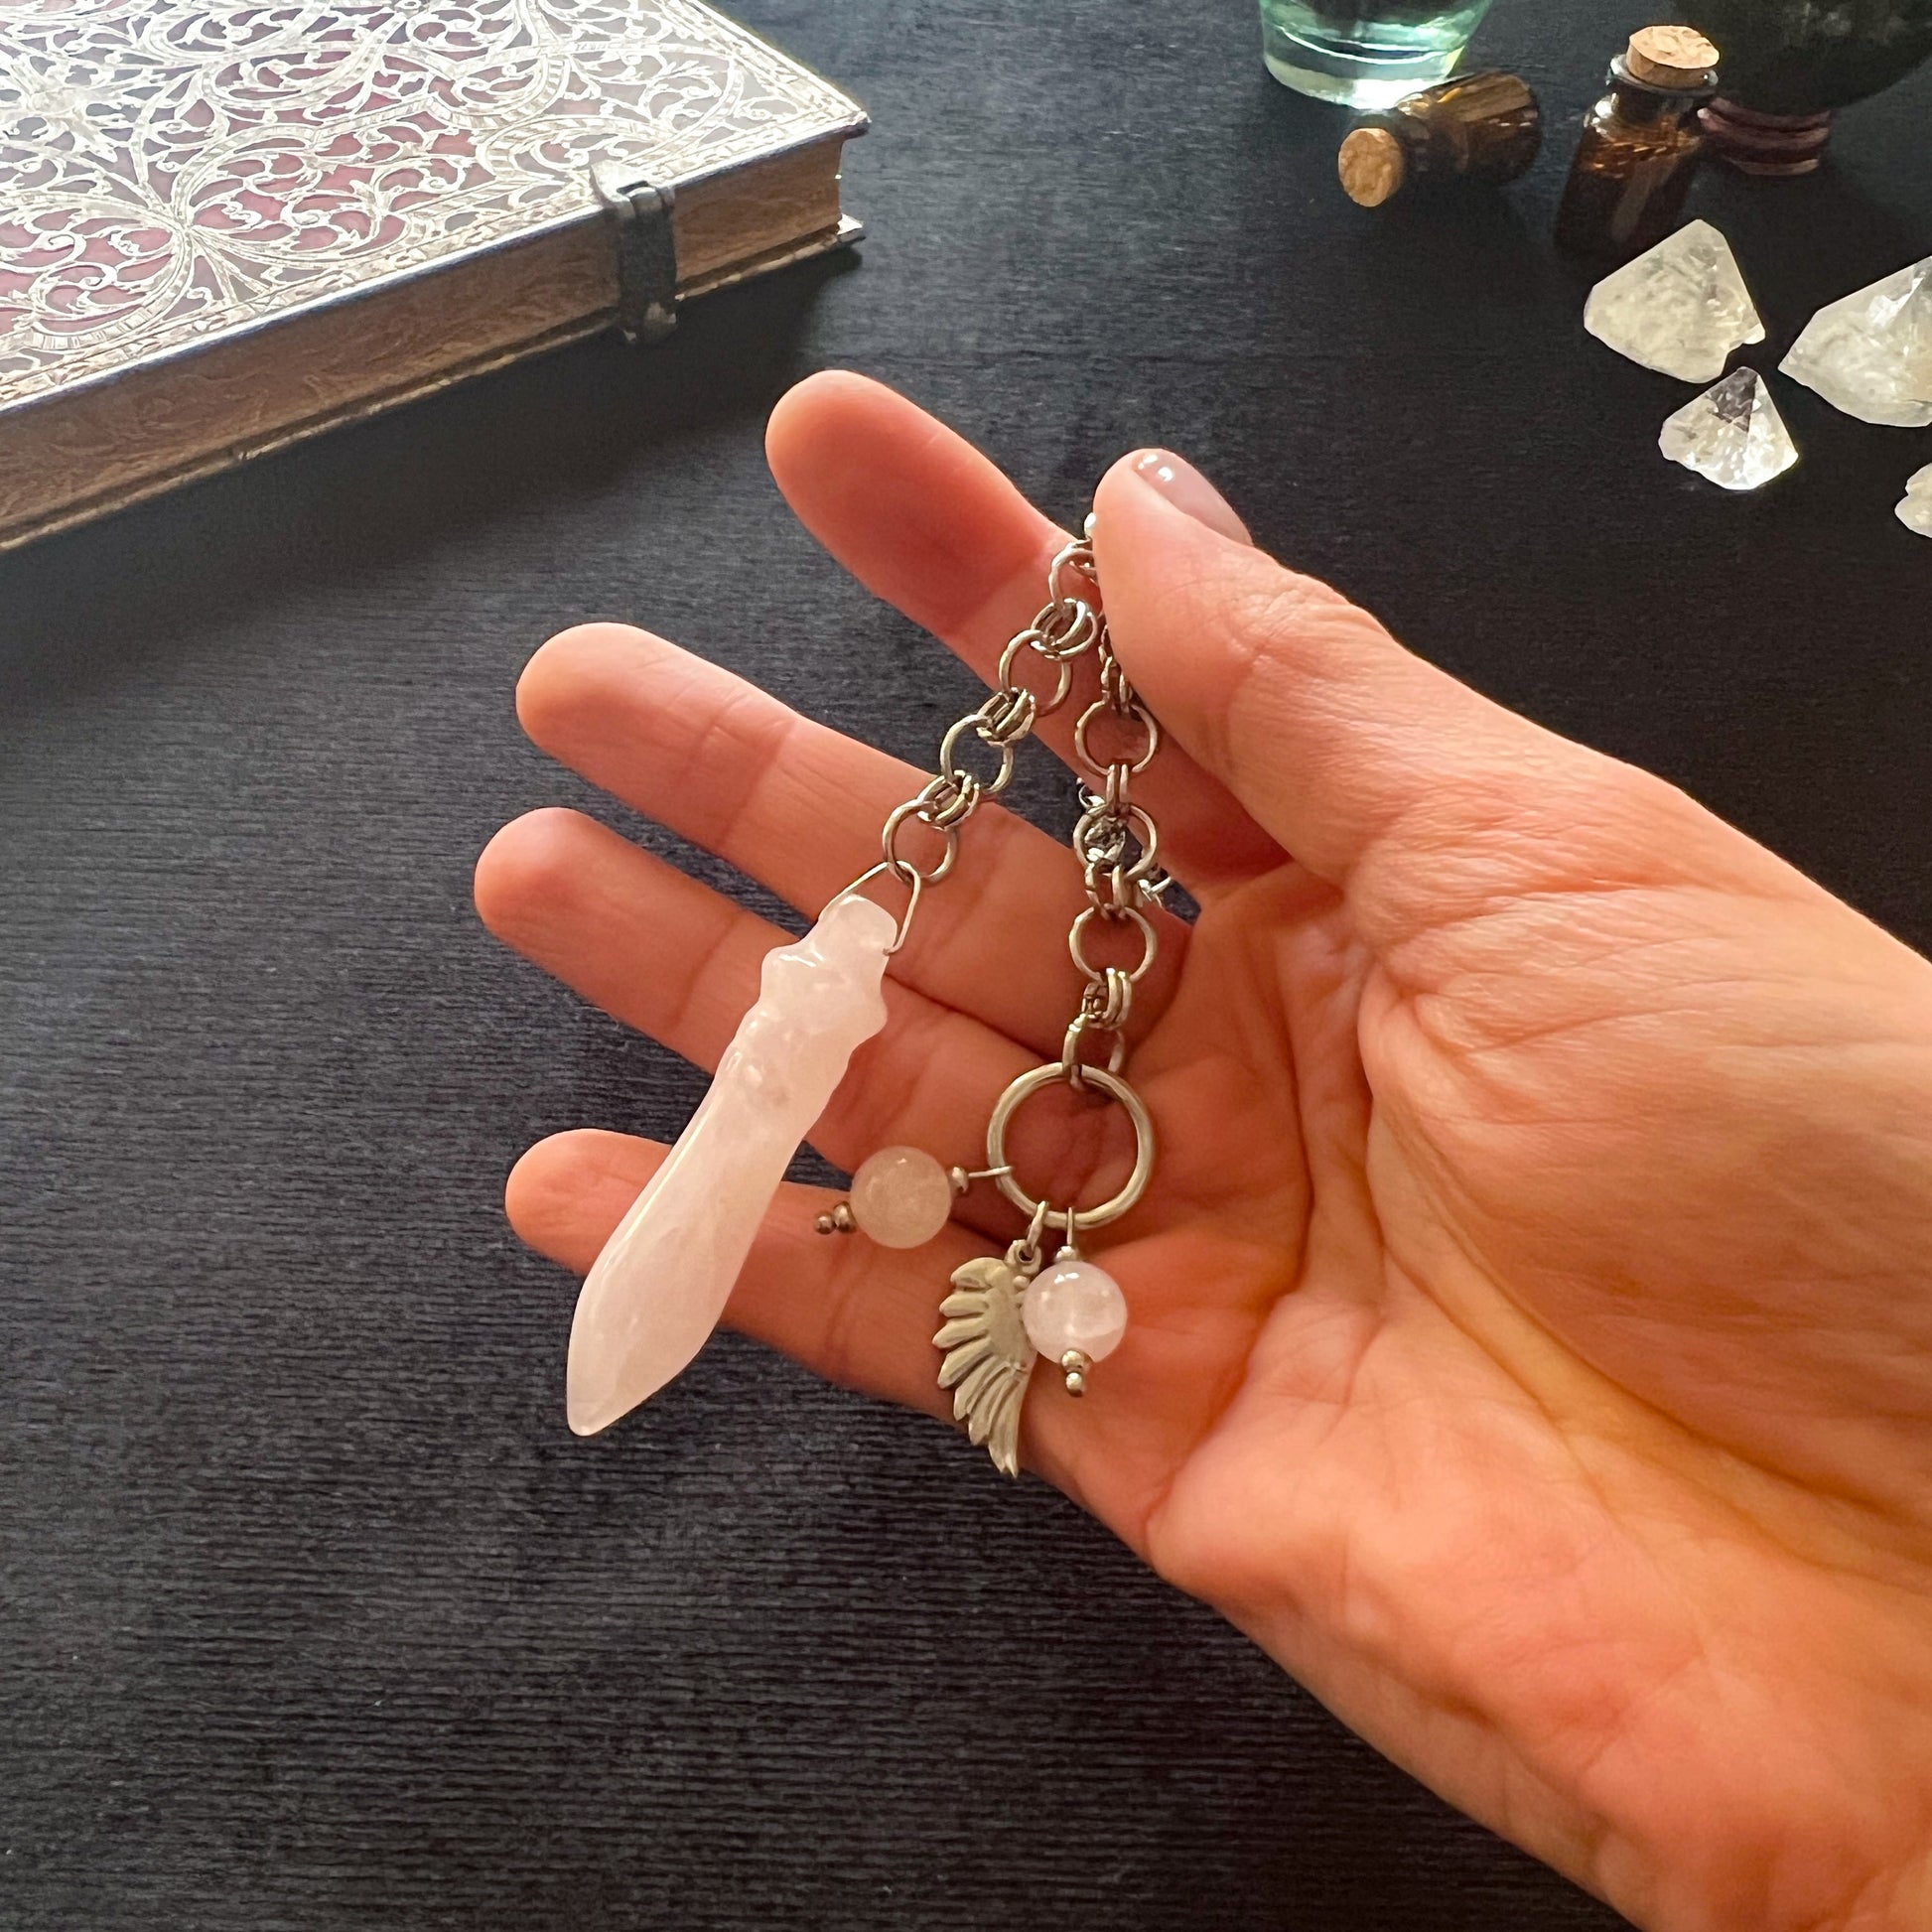 Egyptian divination pendulum Thot rose quartz pendulum chainmail and wing charm dowsing pendulum